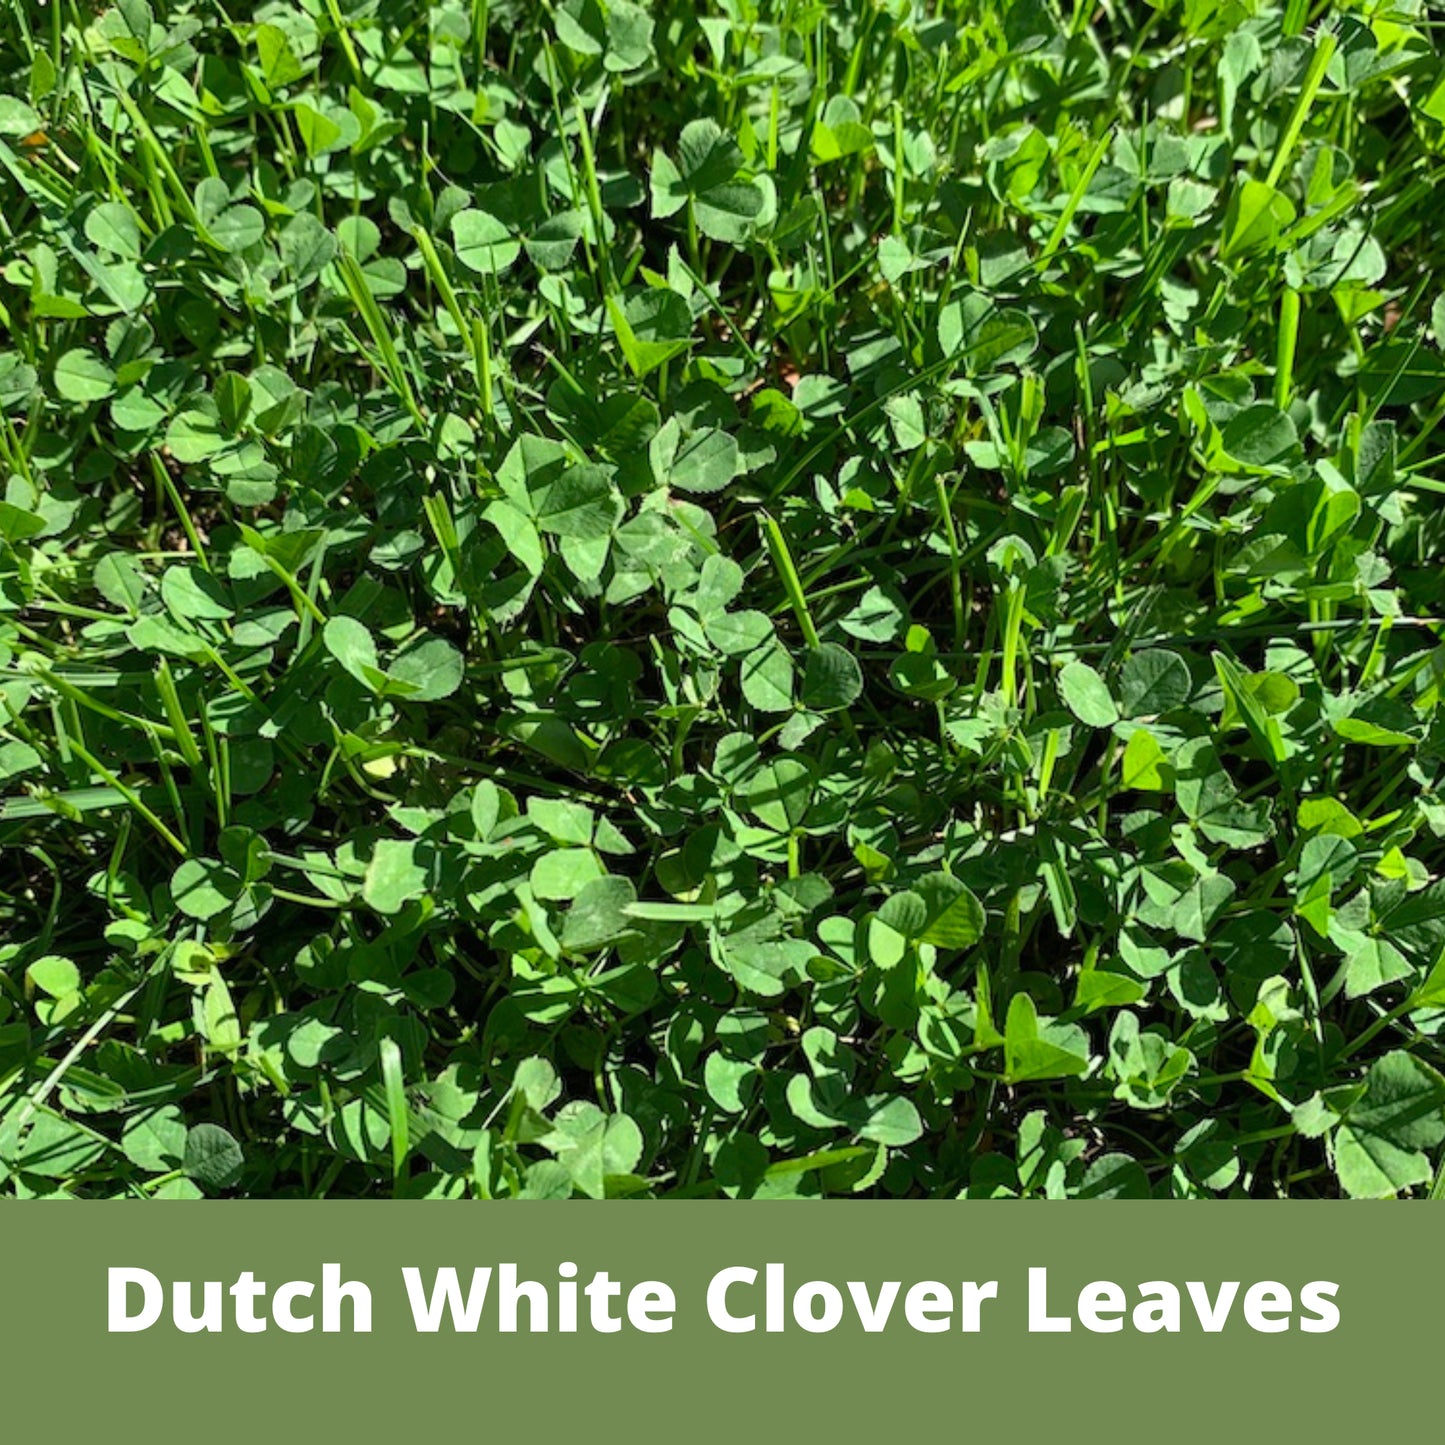 Easy Grow Bundle Kit with Dutch White Clover, Self-Heal, Creeping Thyme